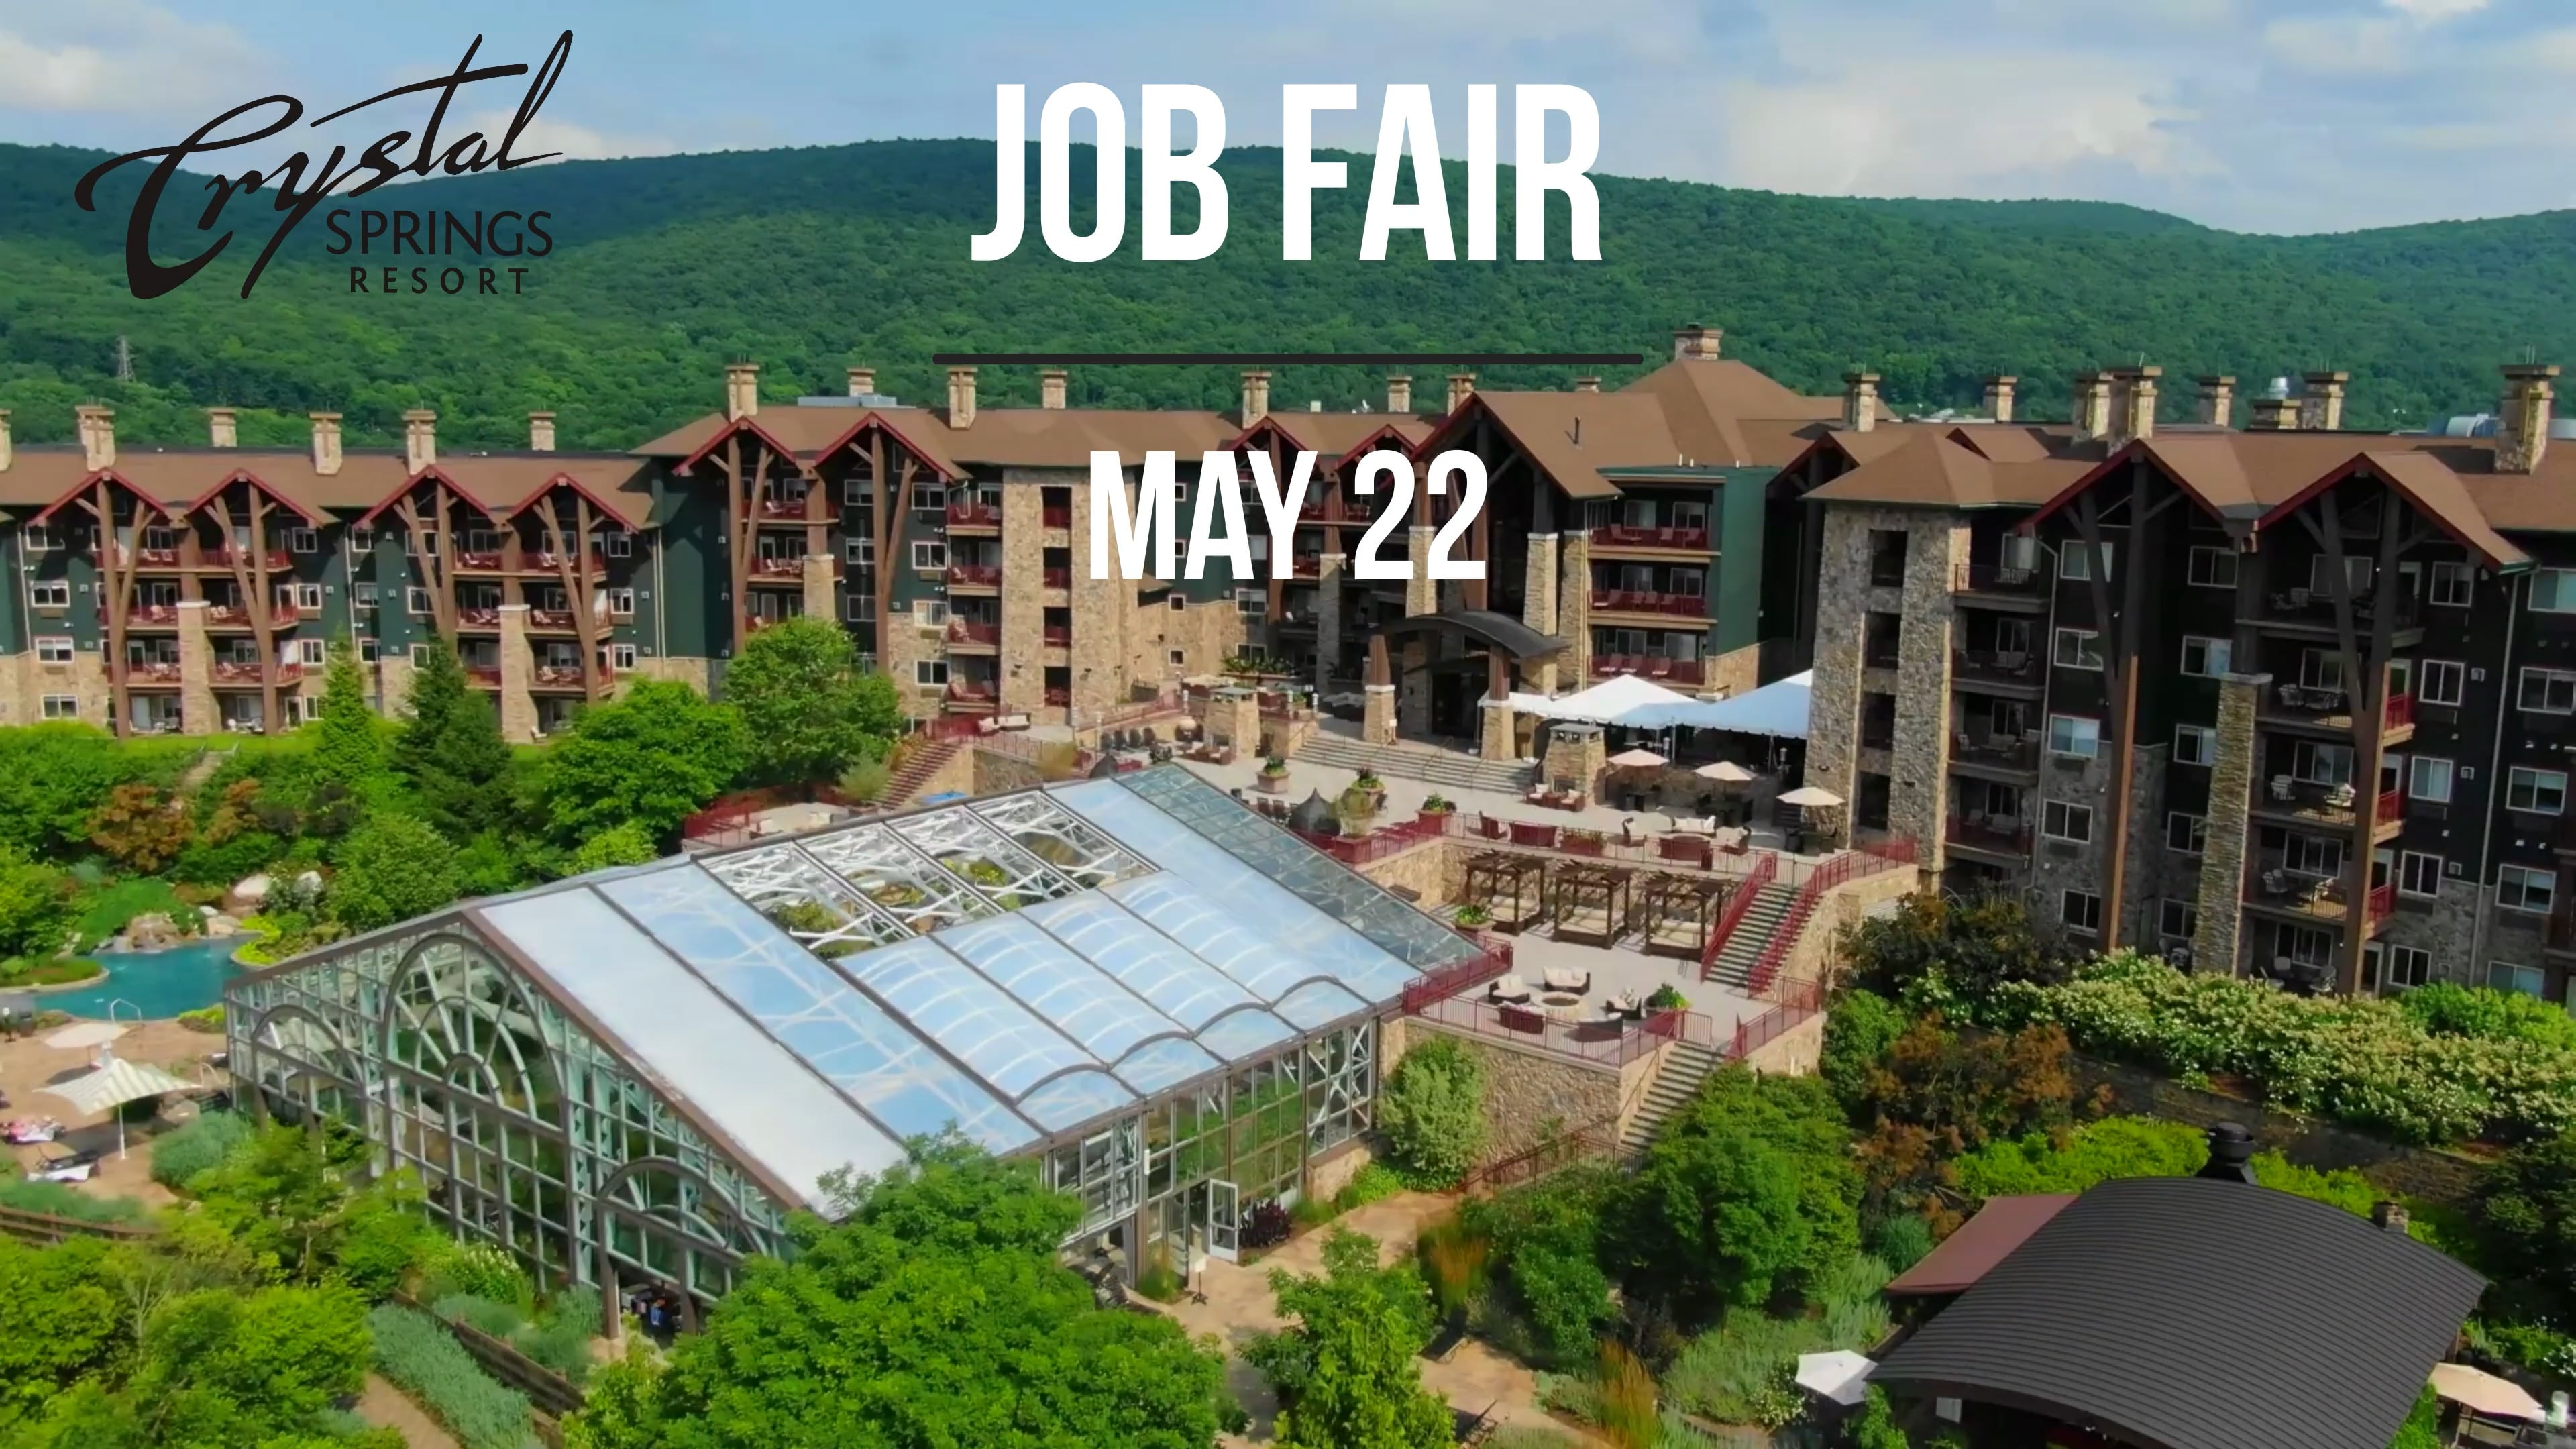 Crystal Springs Job Fair 15 on Vimeo